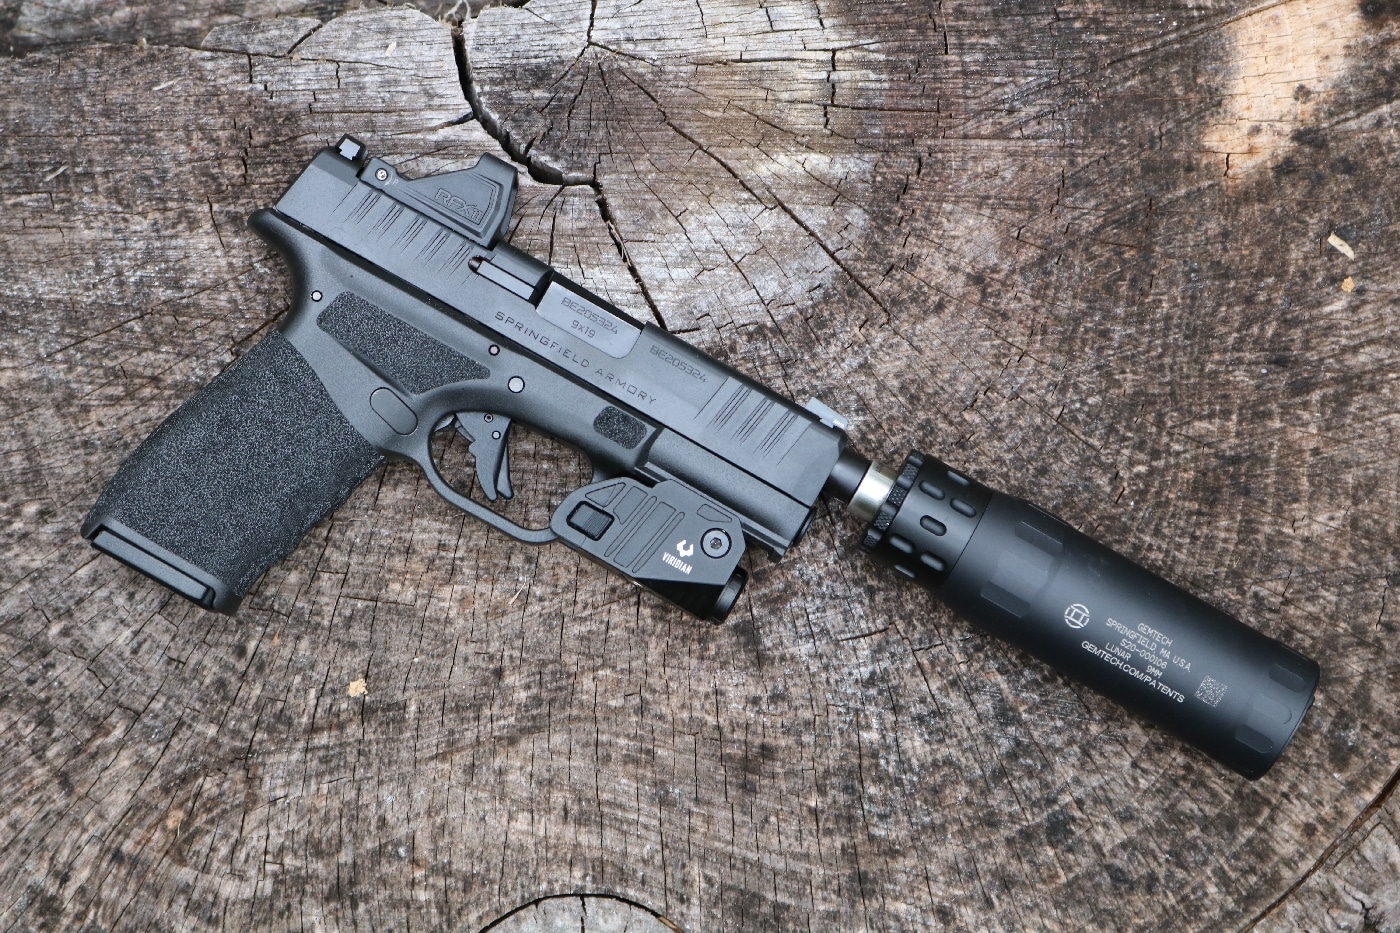 sound suppressor springfield armory hellcat pro pistol threaded barrel 9mm handgun pistol self defense ccw